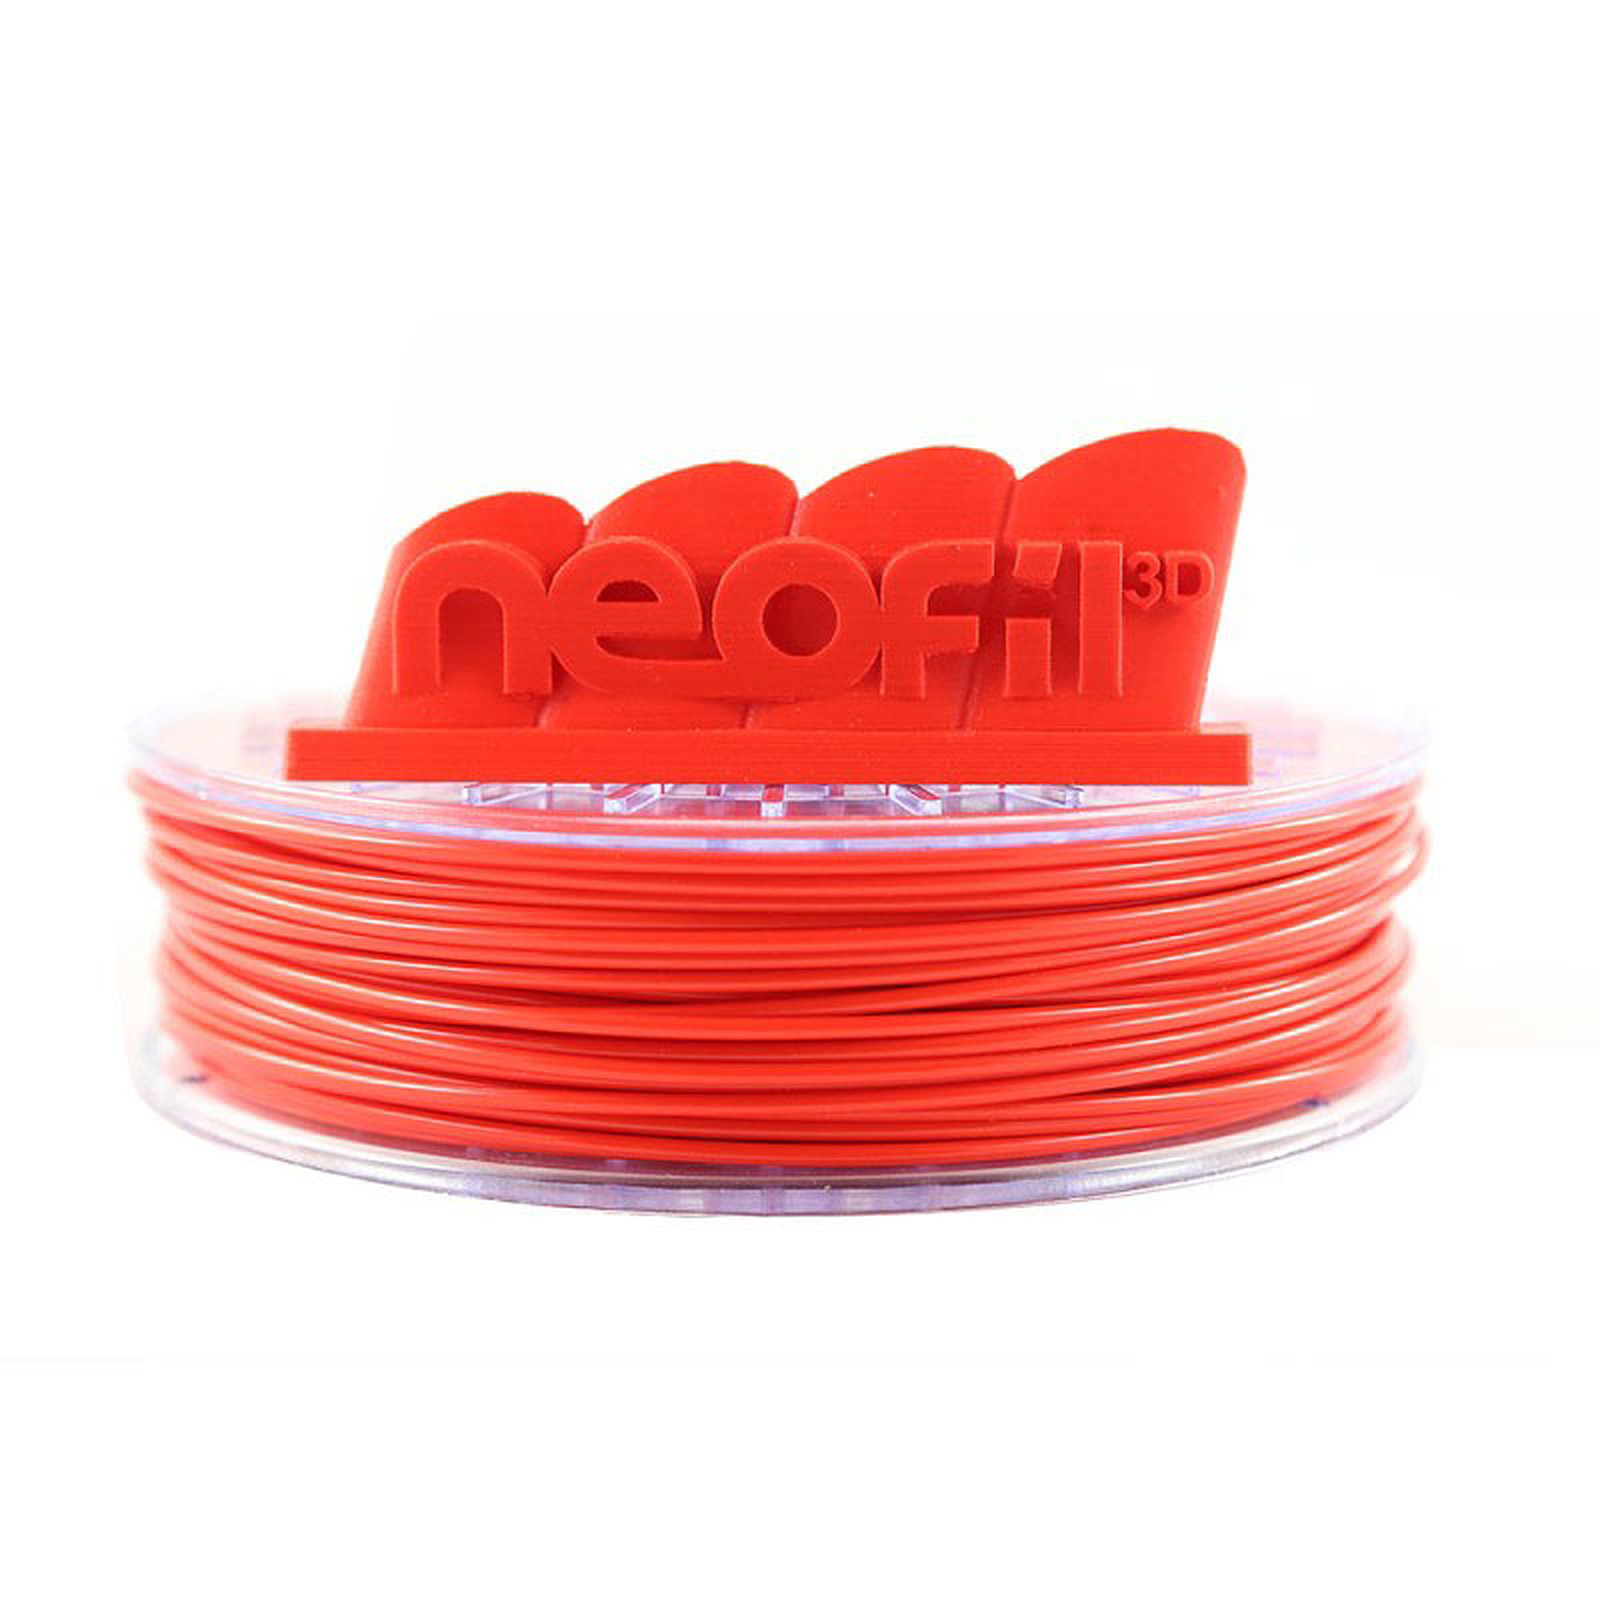 Neofil3D Bobine PLA 2.85mm 750g - Rouge - Filament 3D Neofil3D